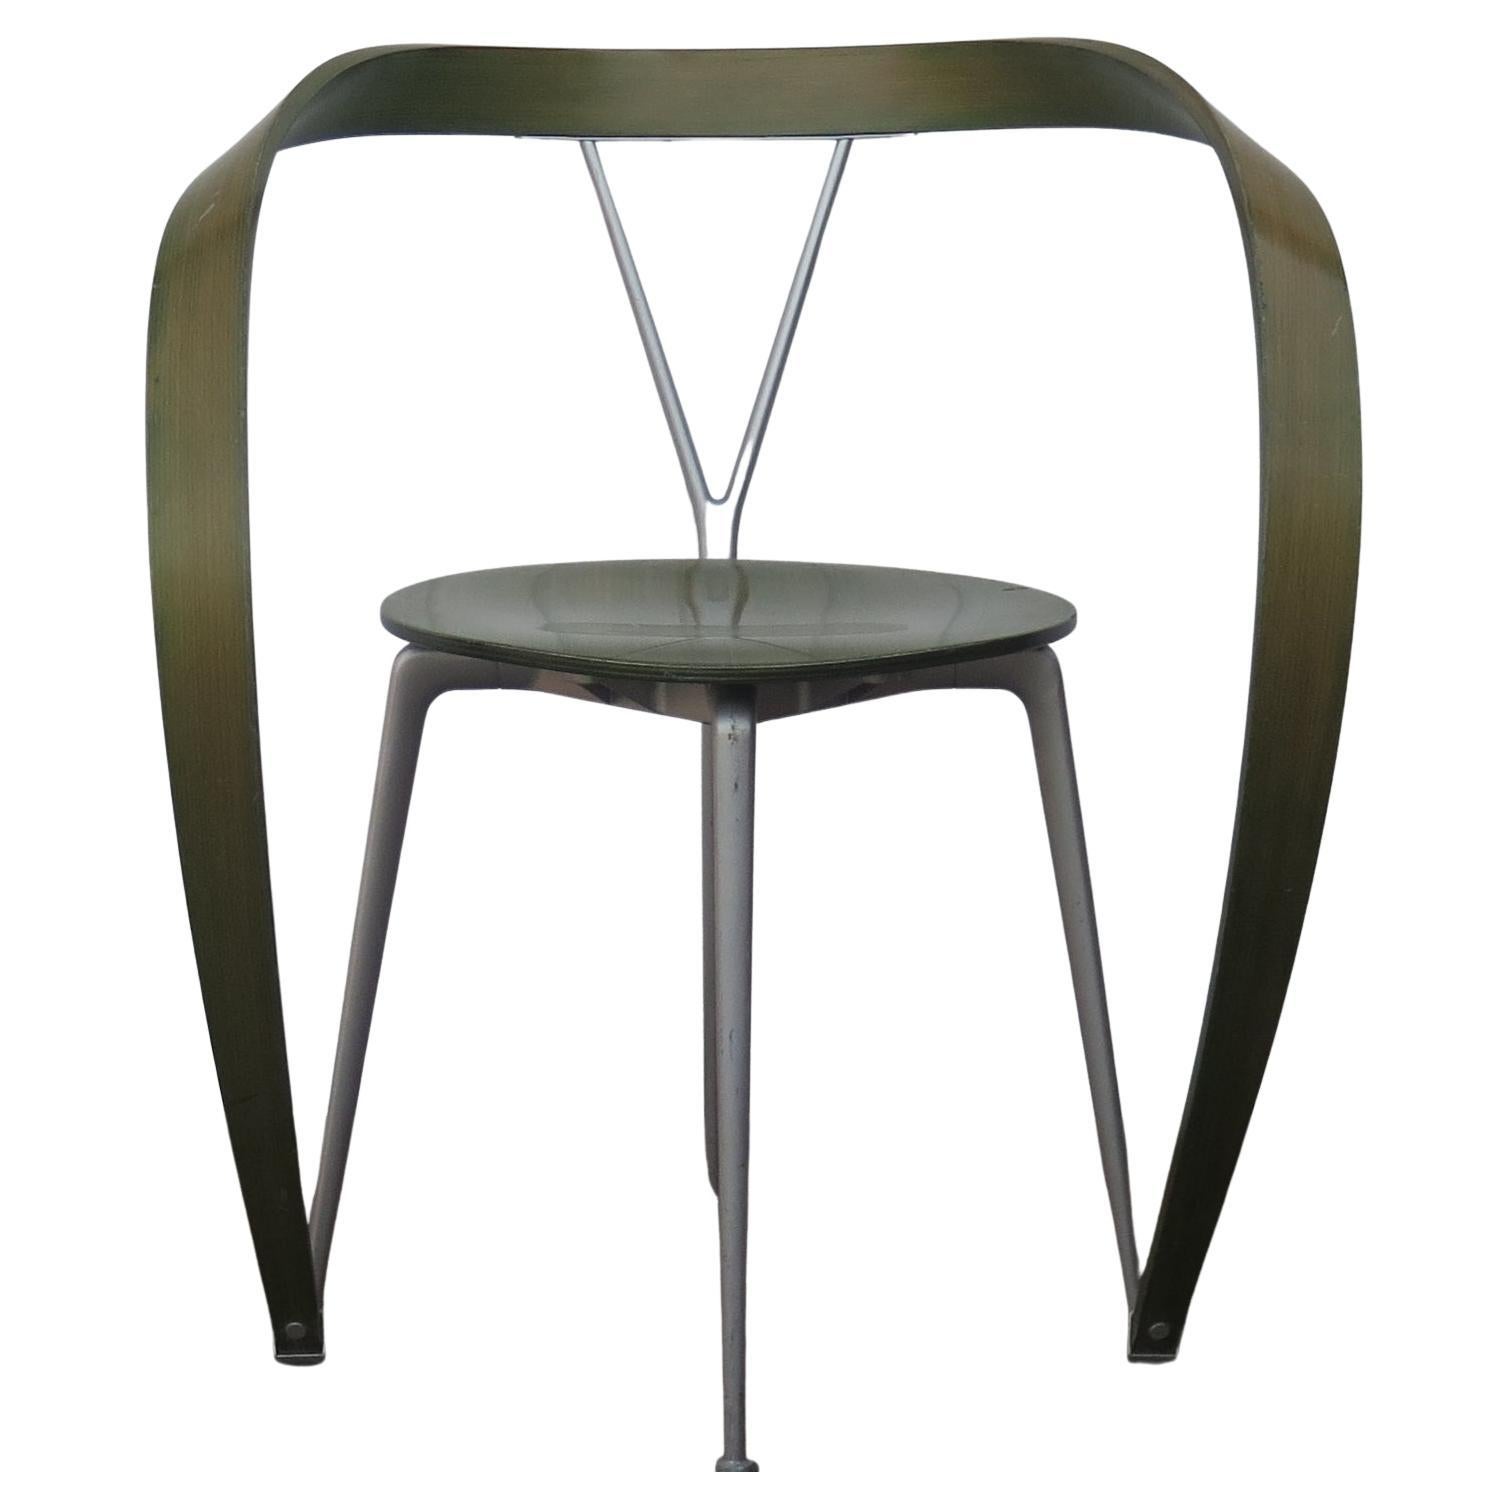 Revers Chair by Andrea Branzi for Cassina Italian Design, Ca 1993